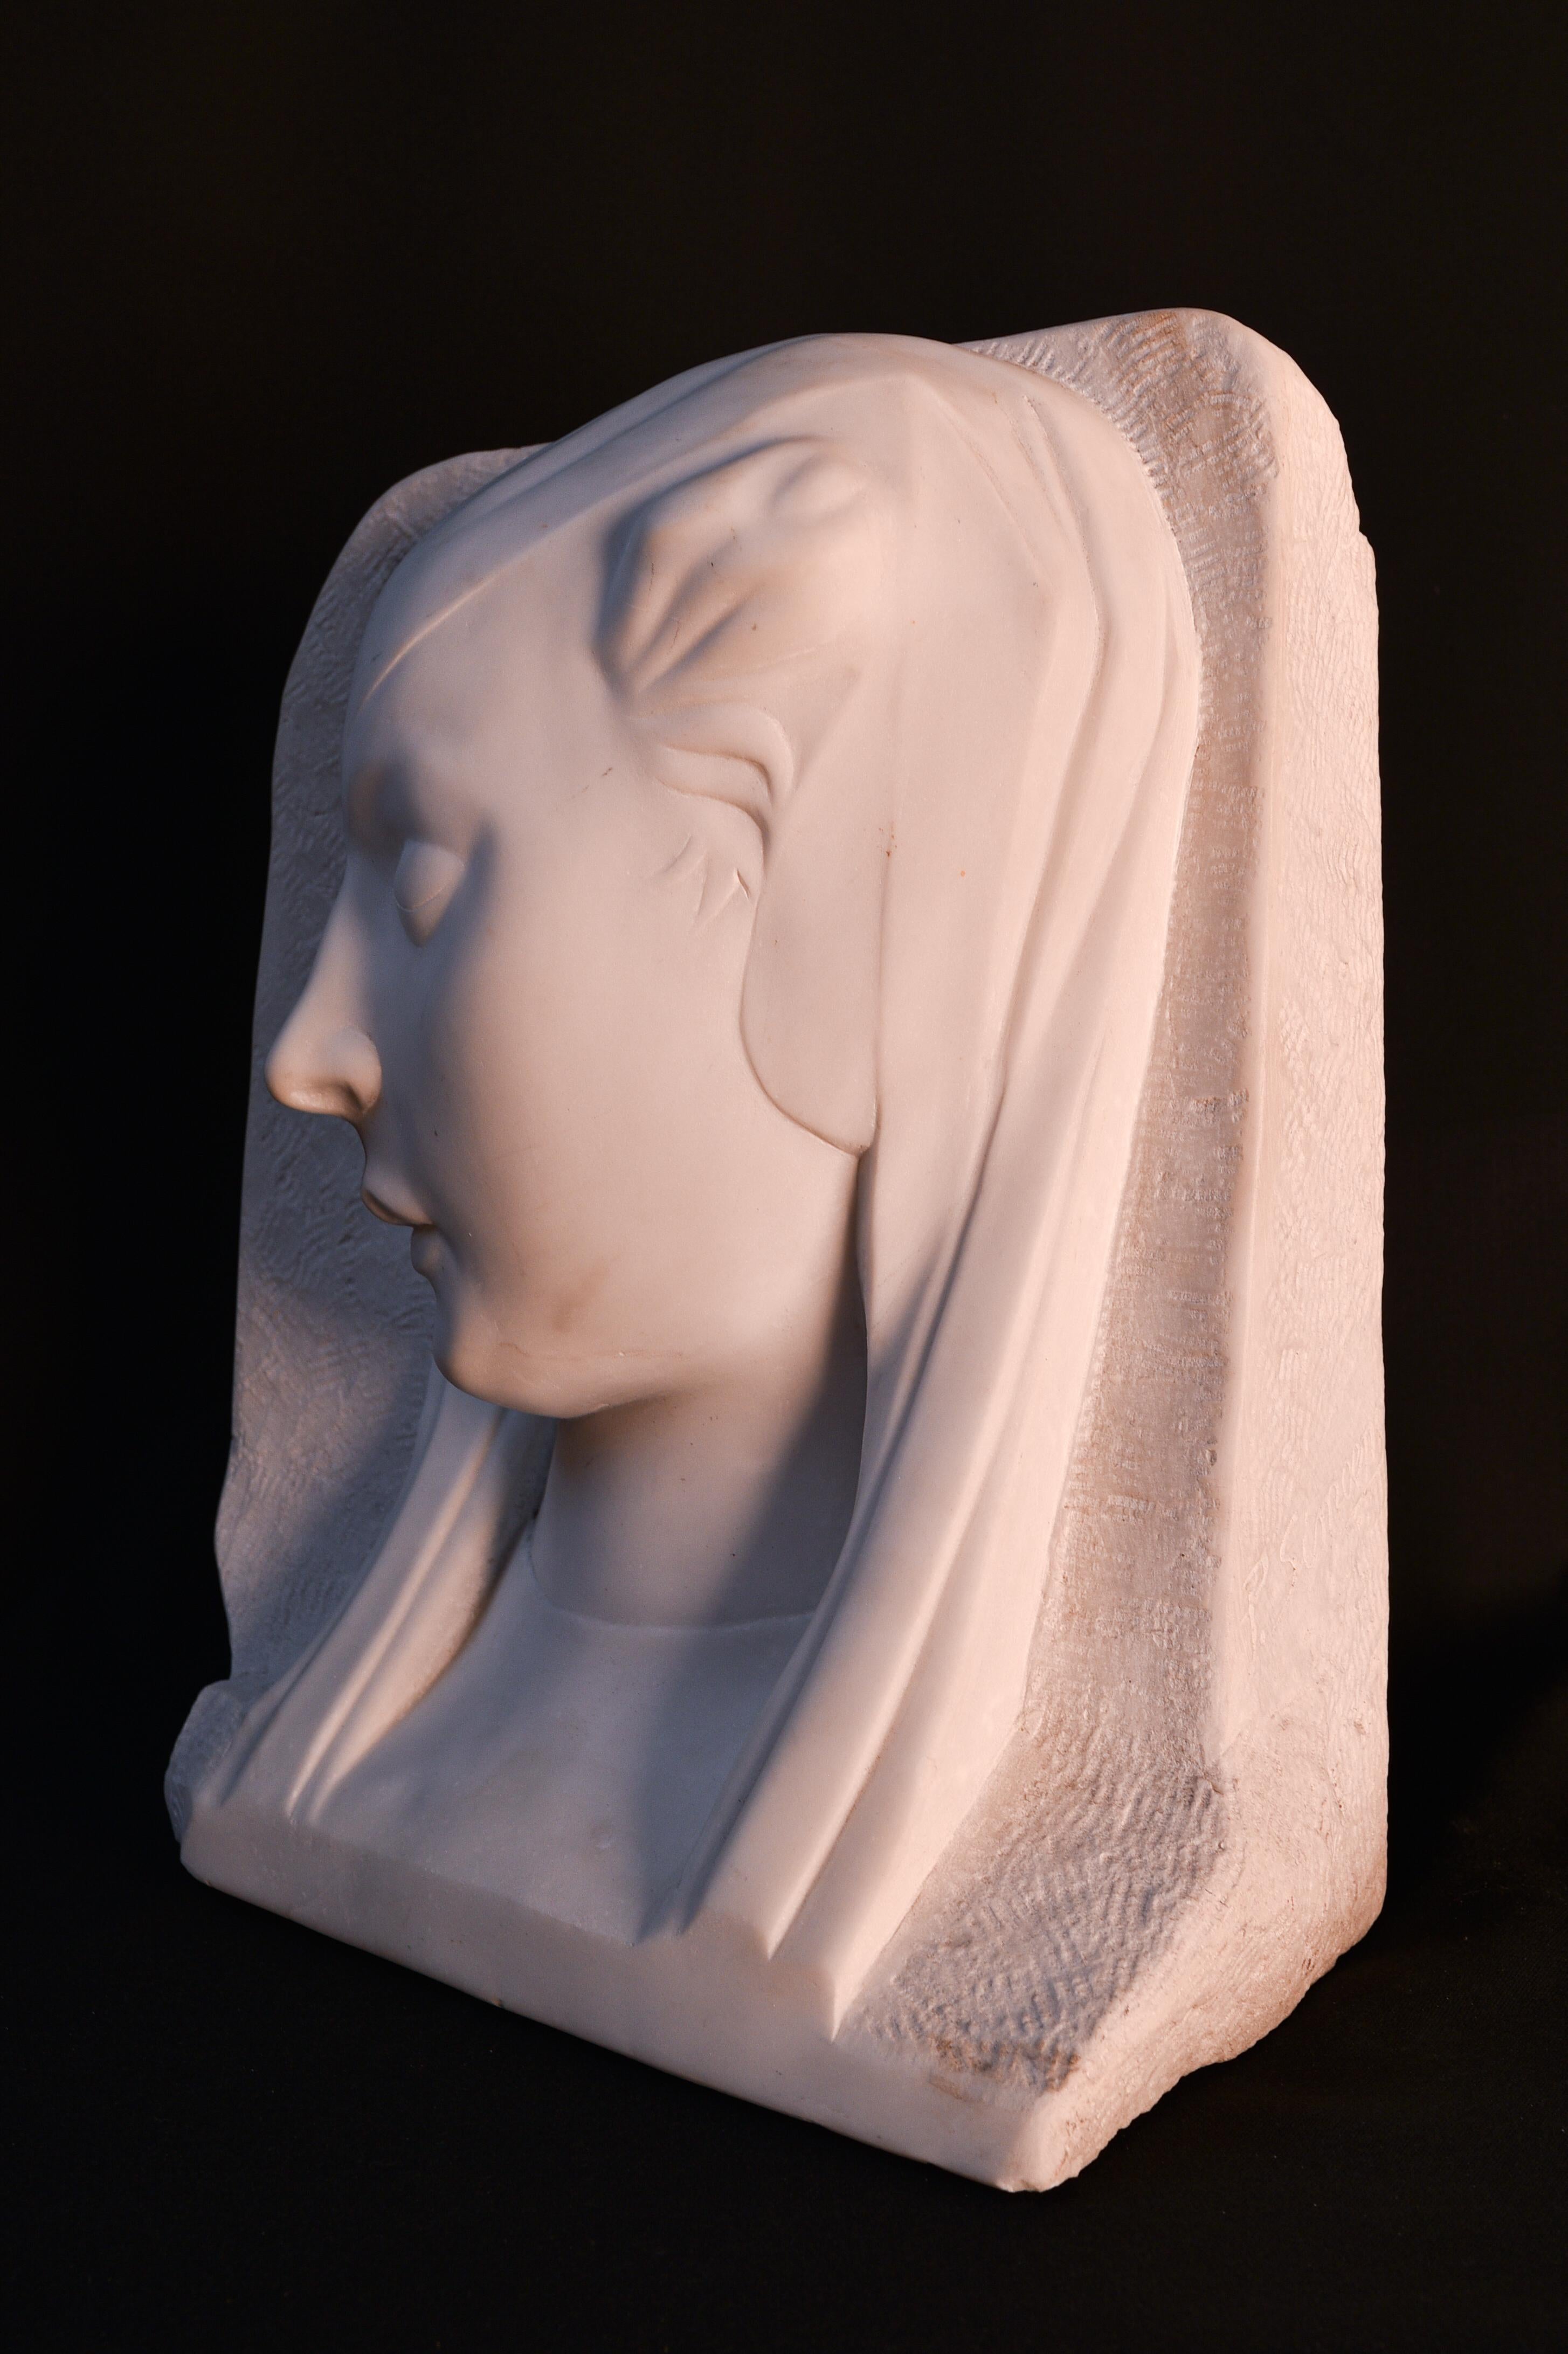 Carrara Marble Hand-carved 20th century female bust in white Carrara marble, by P. Simoens